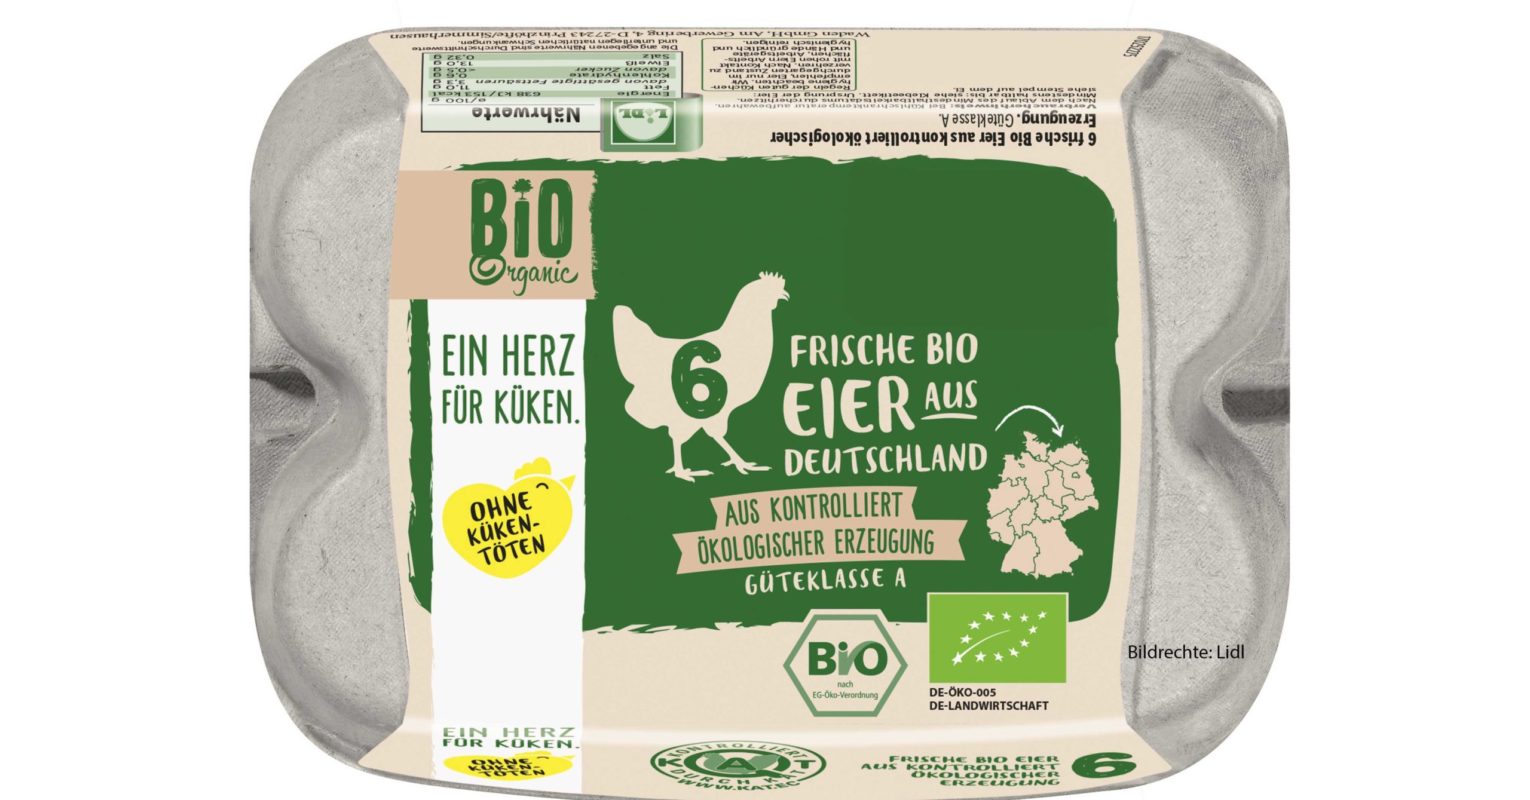 Deutsche „Kükentöten-freie“ Bio-Eier ab sofort in allen Lidl-Filialen